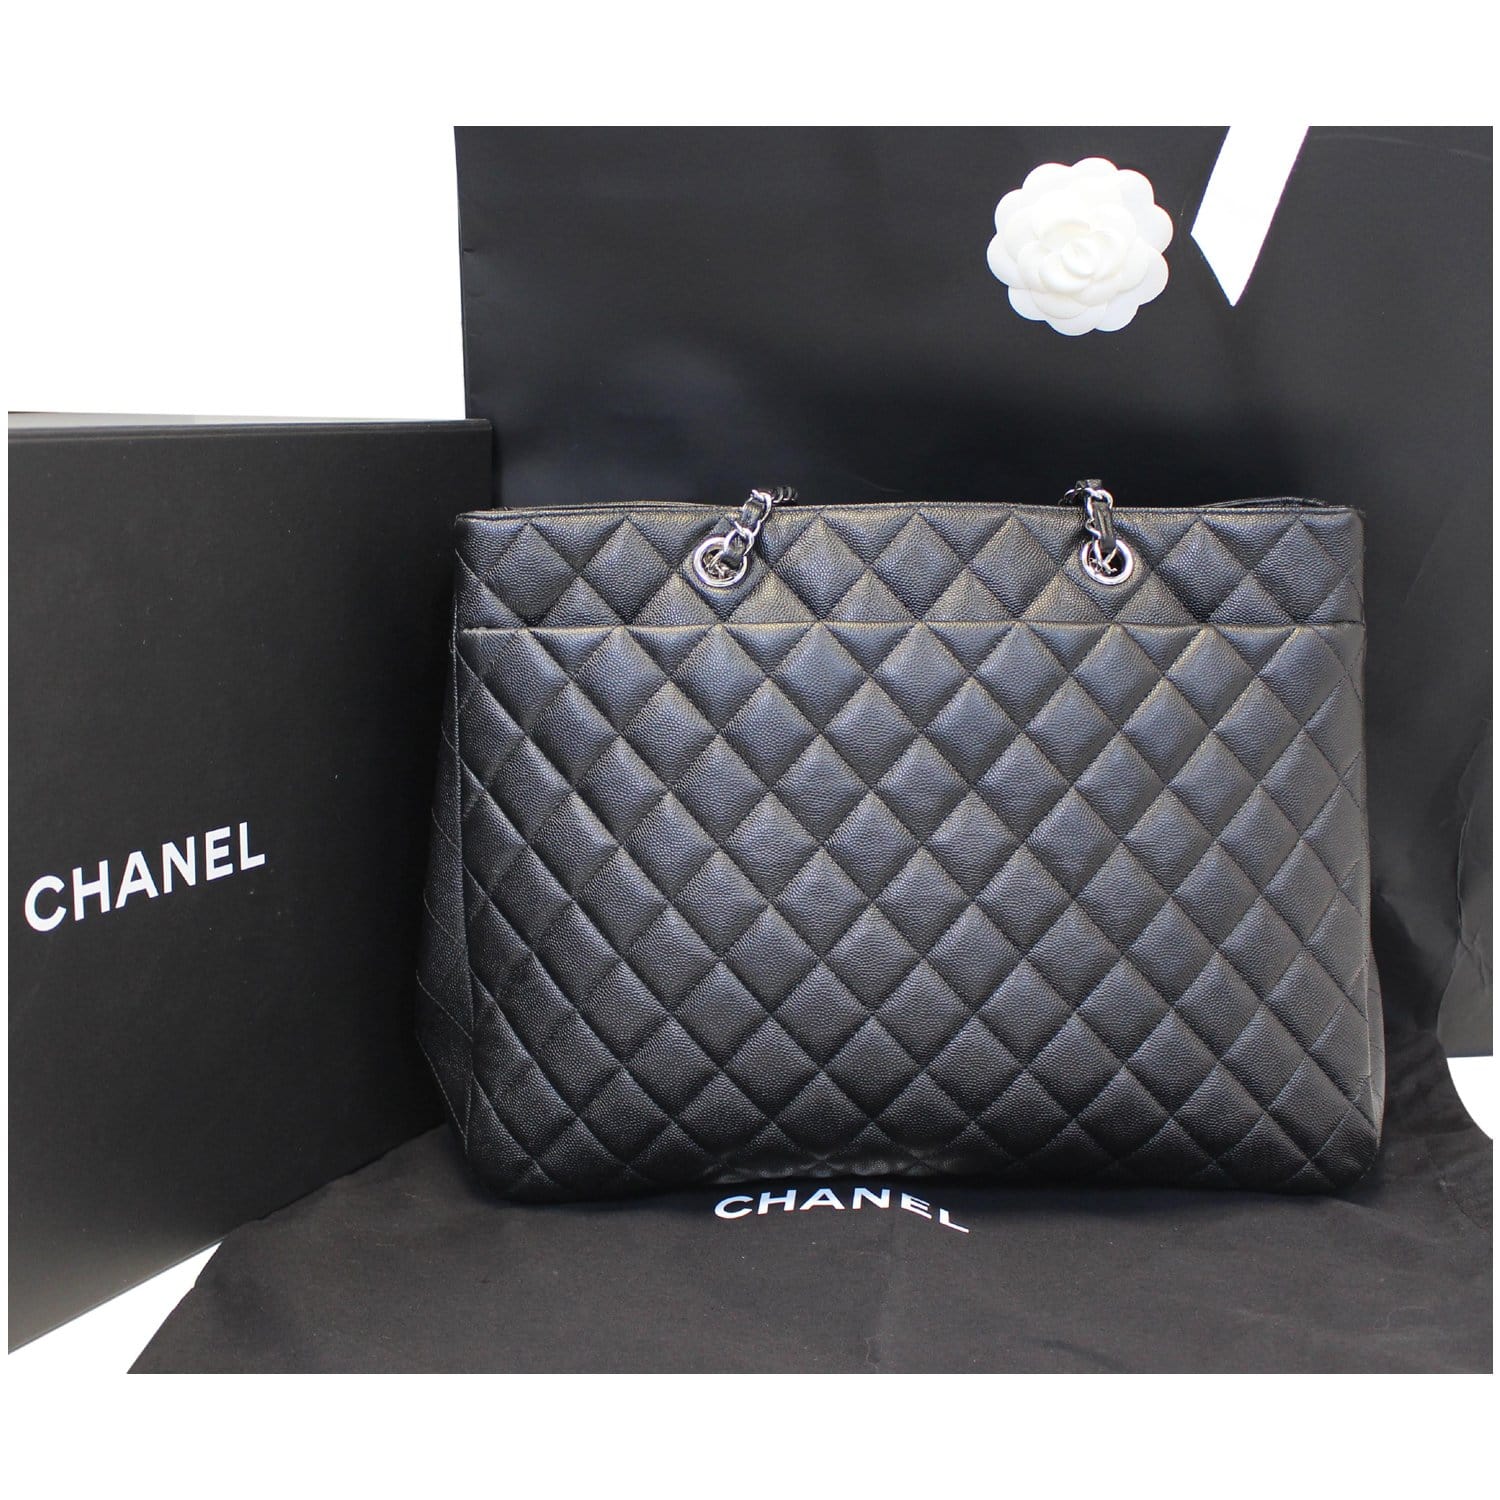 The Chanel XXL Bag Has 2 Sizes Now | Bragmybag | Bags, Luxury handbag  brands, Chanel handbags